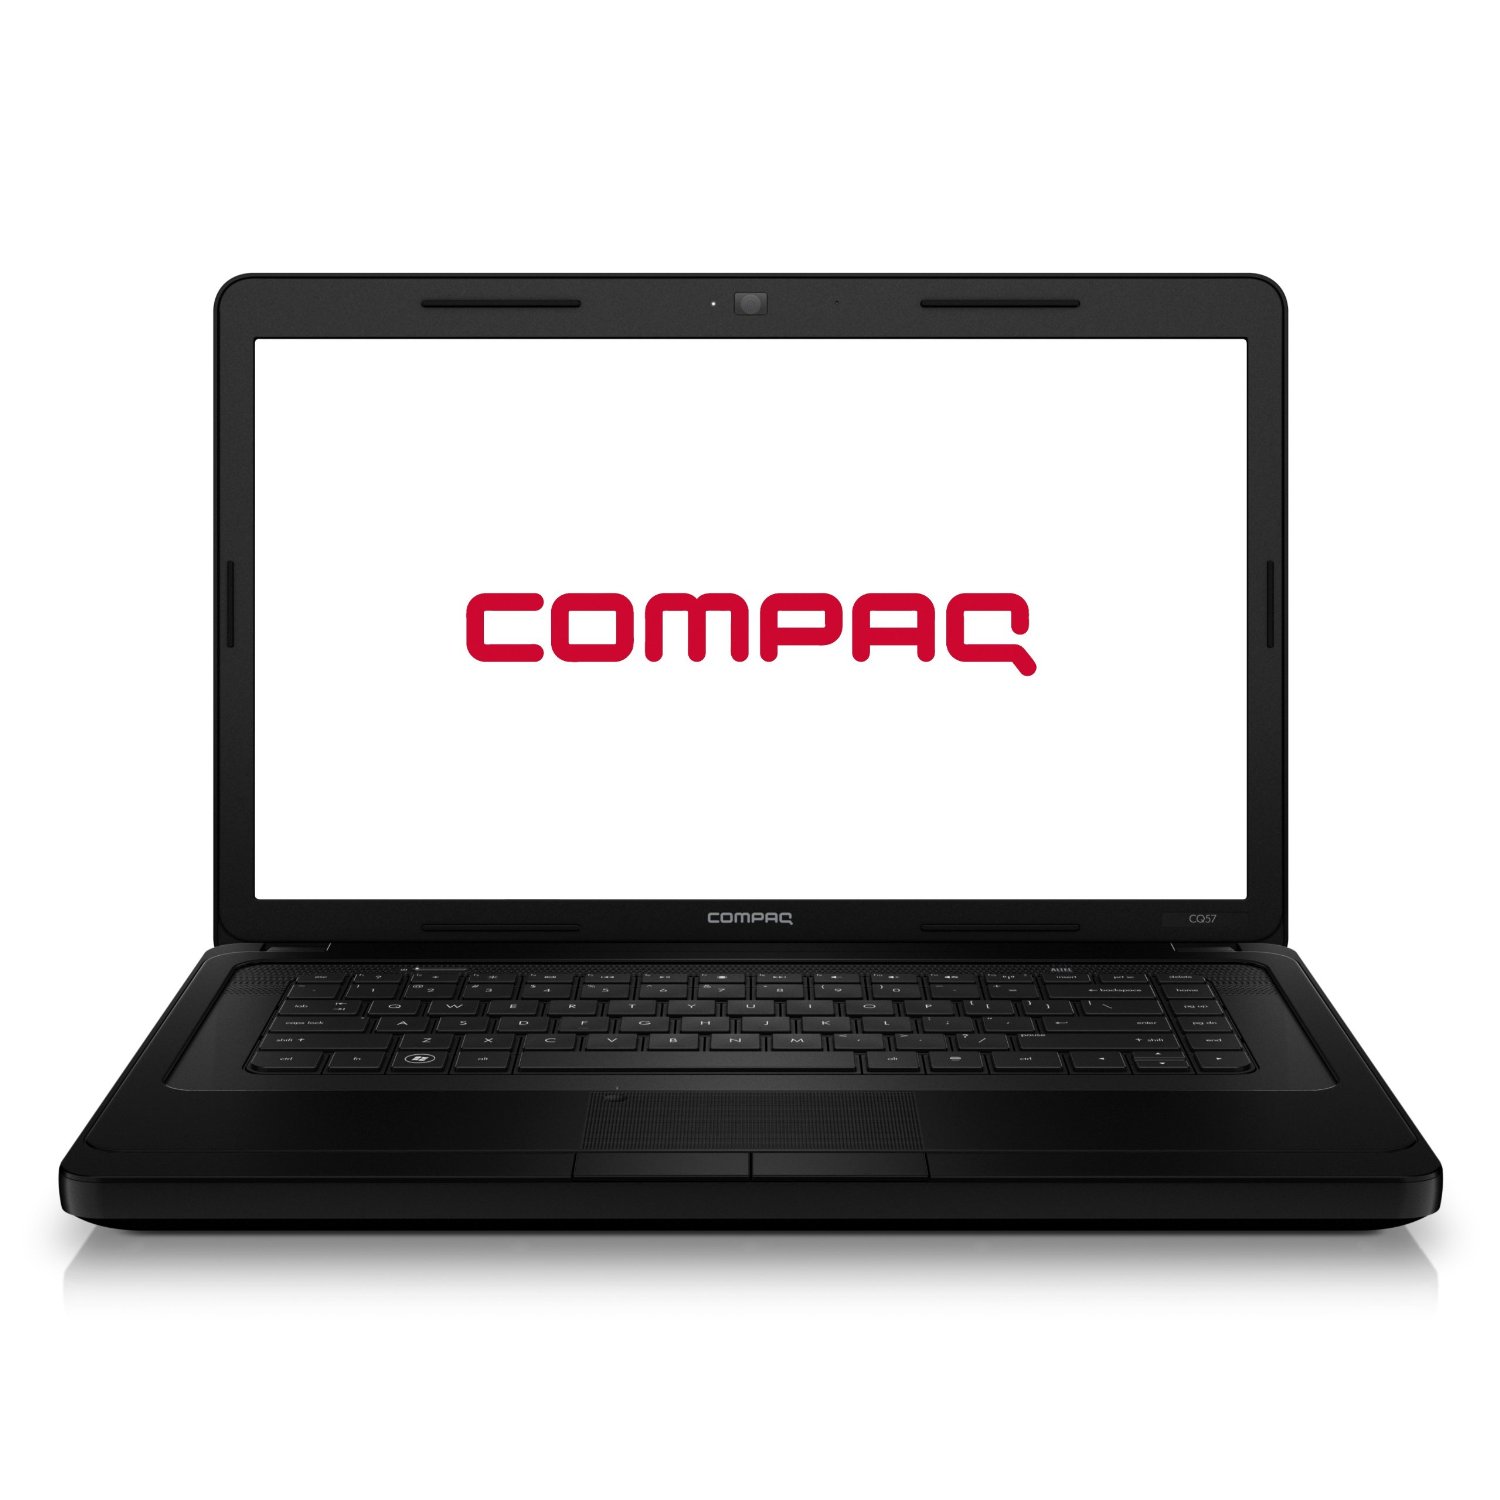 Disapproved Bruise corn HP Compaq Presario CQ58 Series - Notebookcheck.net External Reviews